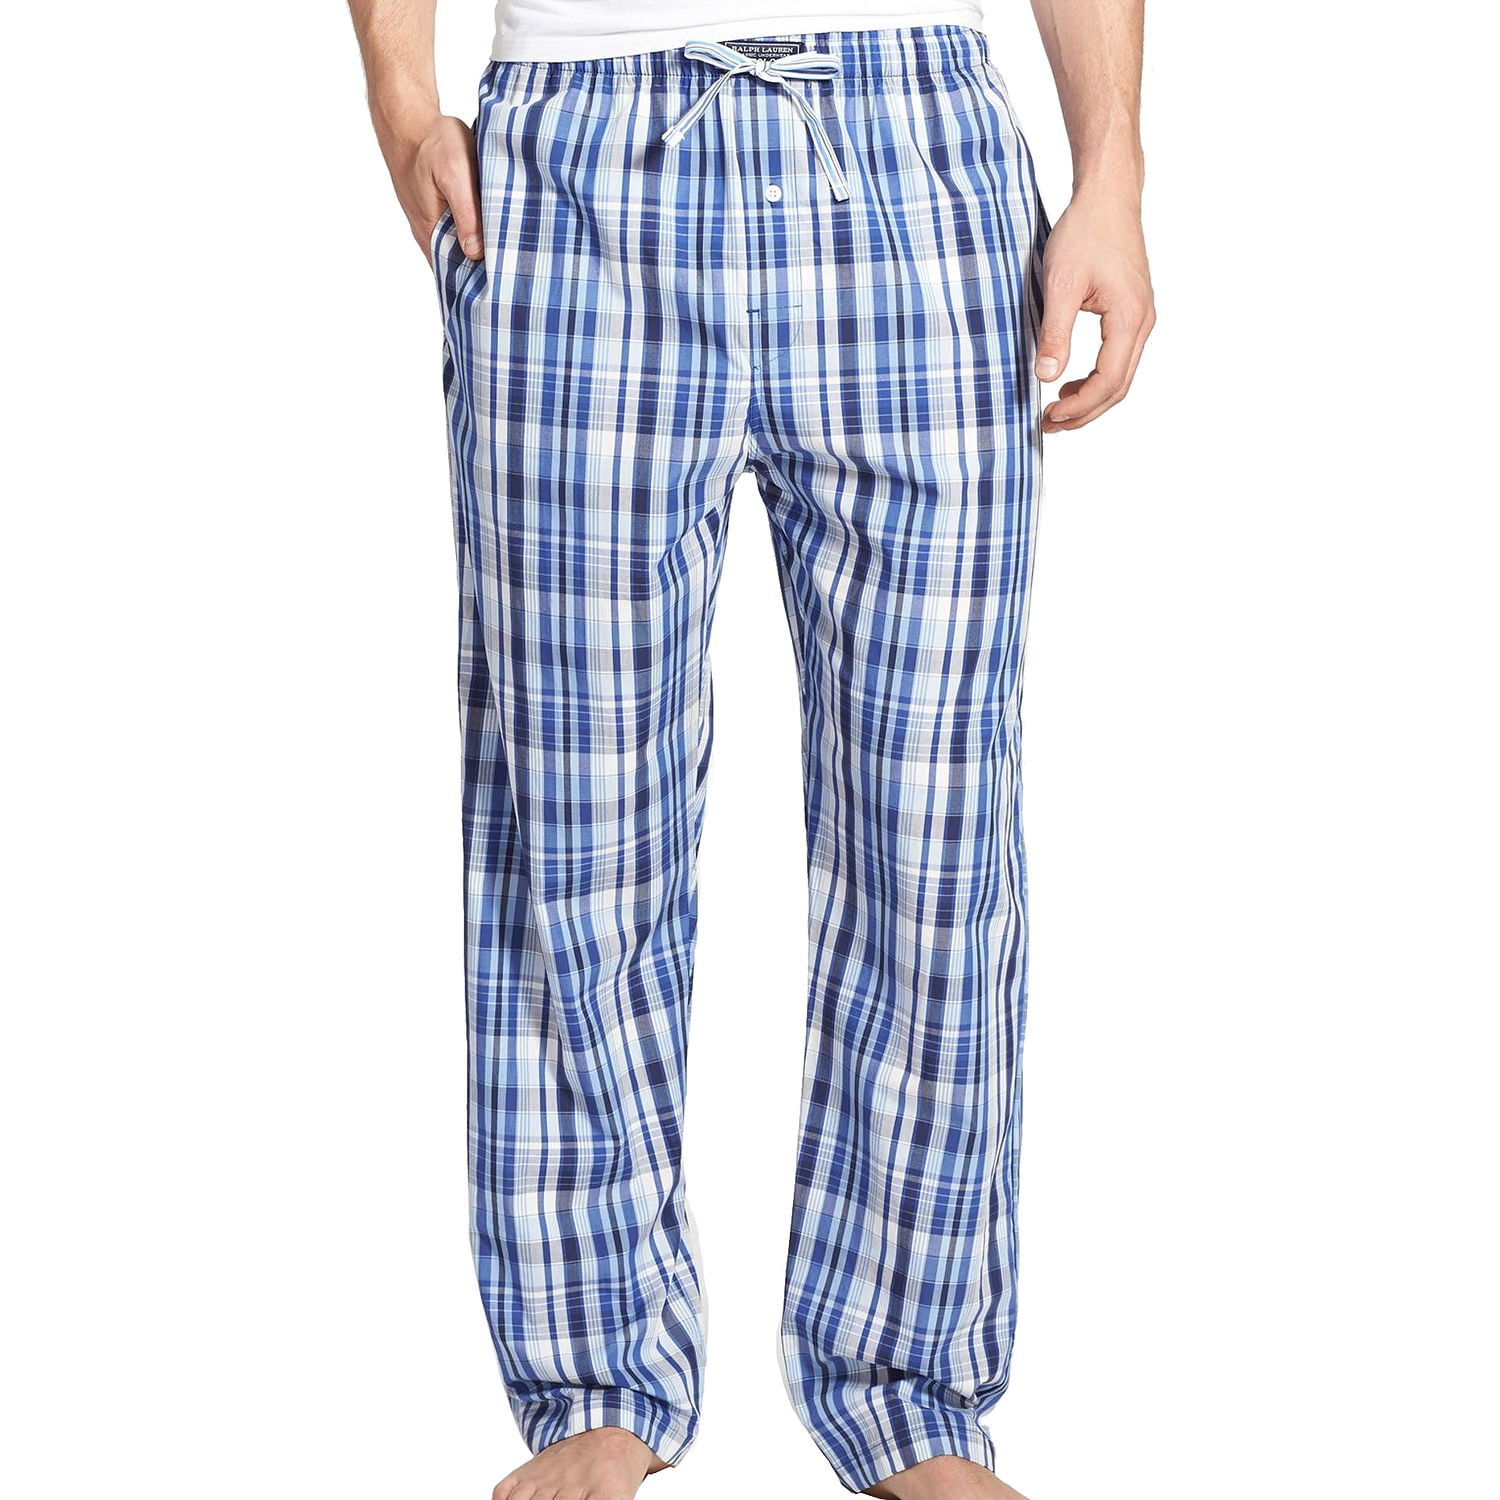 Vineyard Vines HO HO Lounge Pants Pajama Bottom Moonshine Men's size L,XL 